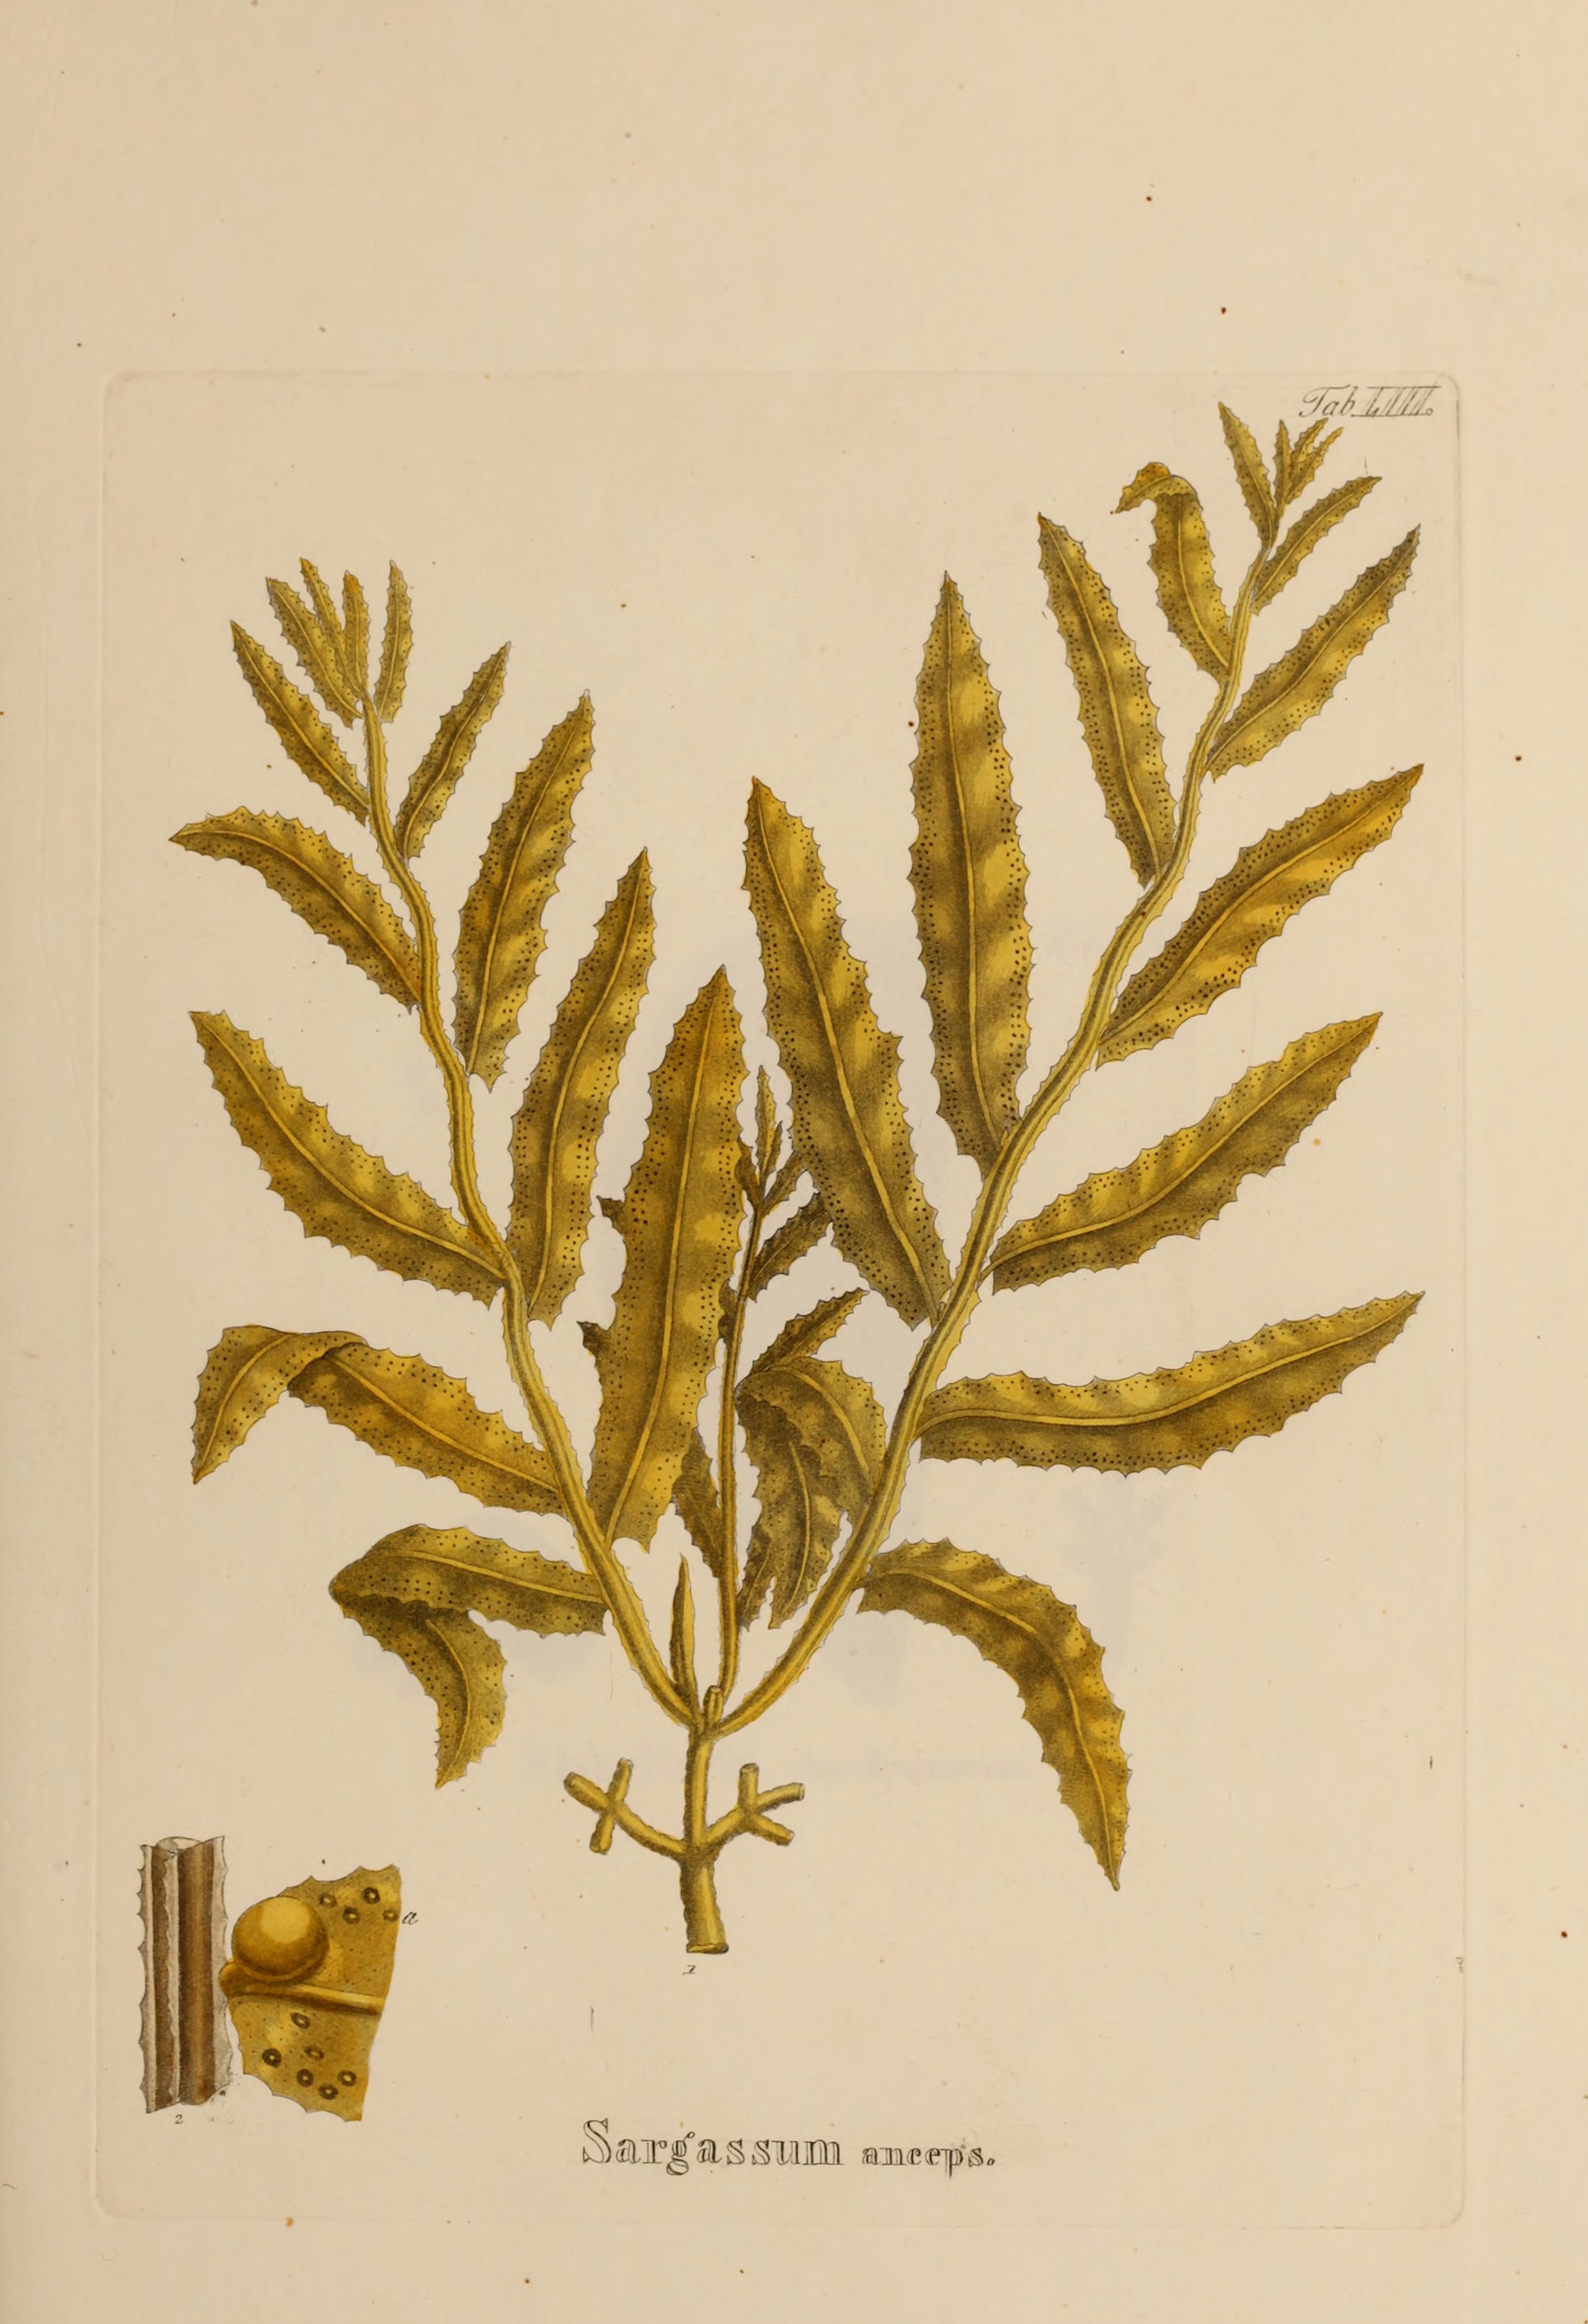 Hydrophytologiae Regni Neapolitani icones - auctore Stephano delle Chiaie. (1829) (14590753650)